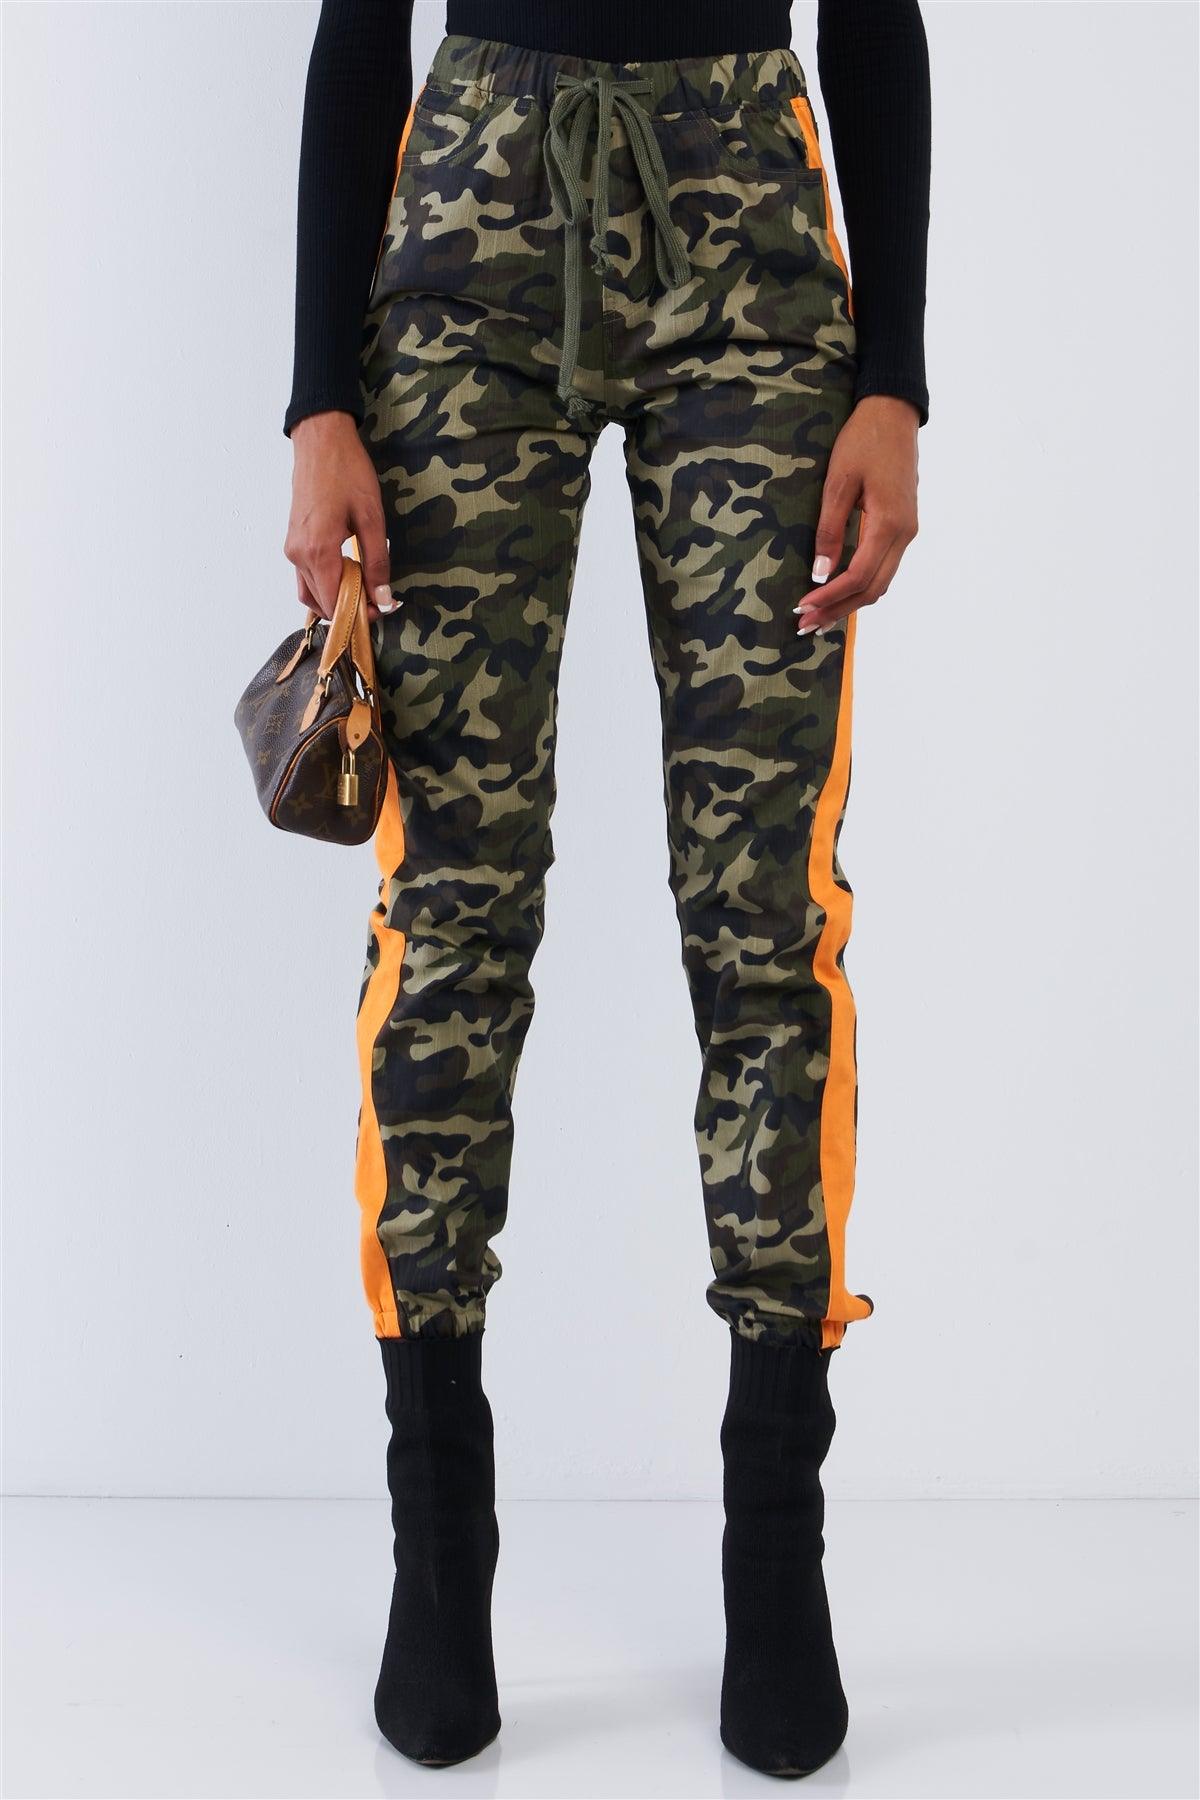 Olive Camouflage High Waisted Orange Striped Elastic Waist Draw String Cargo Pants